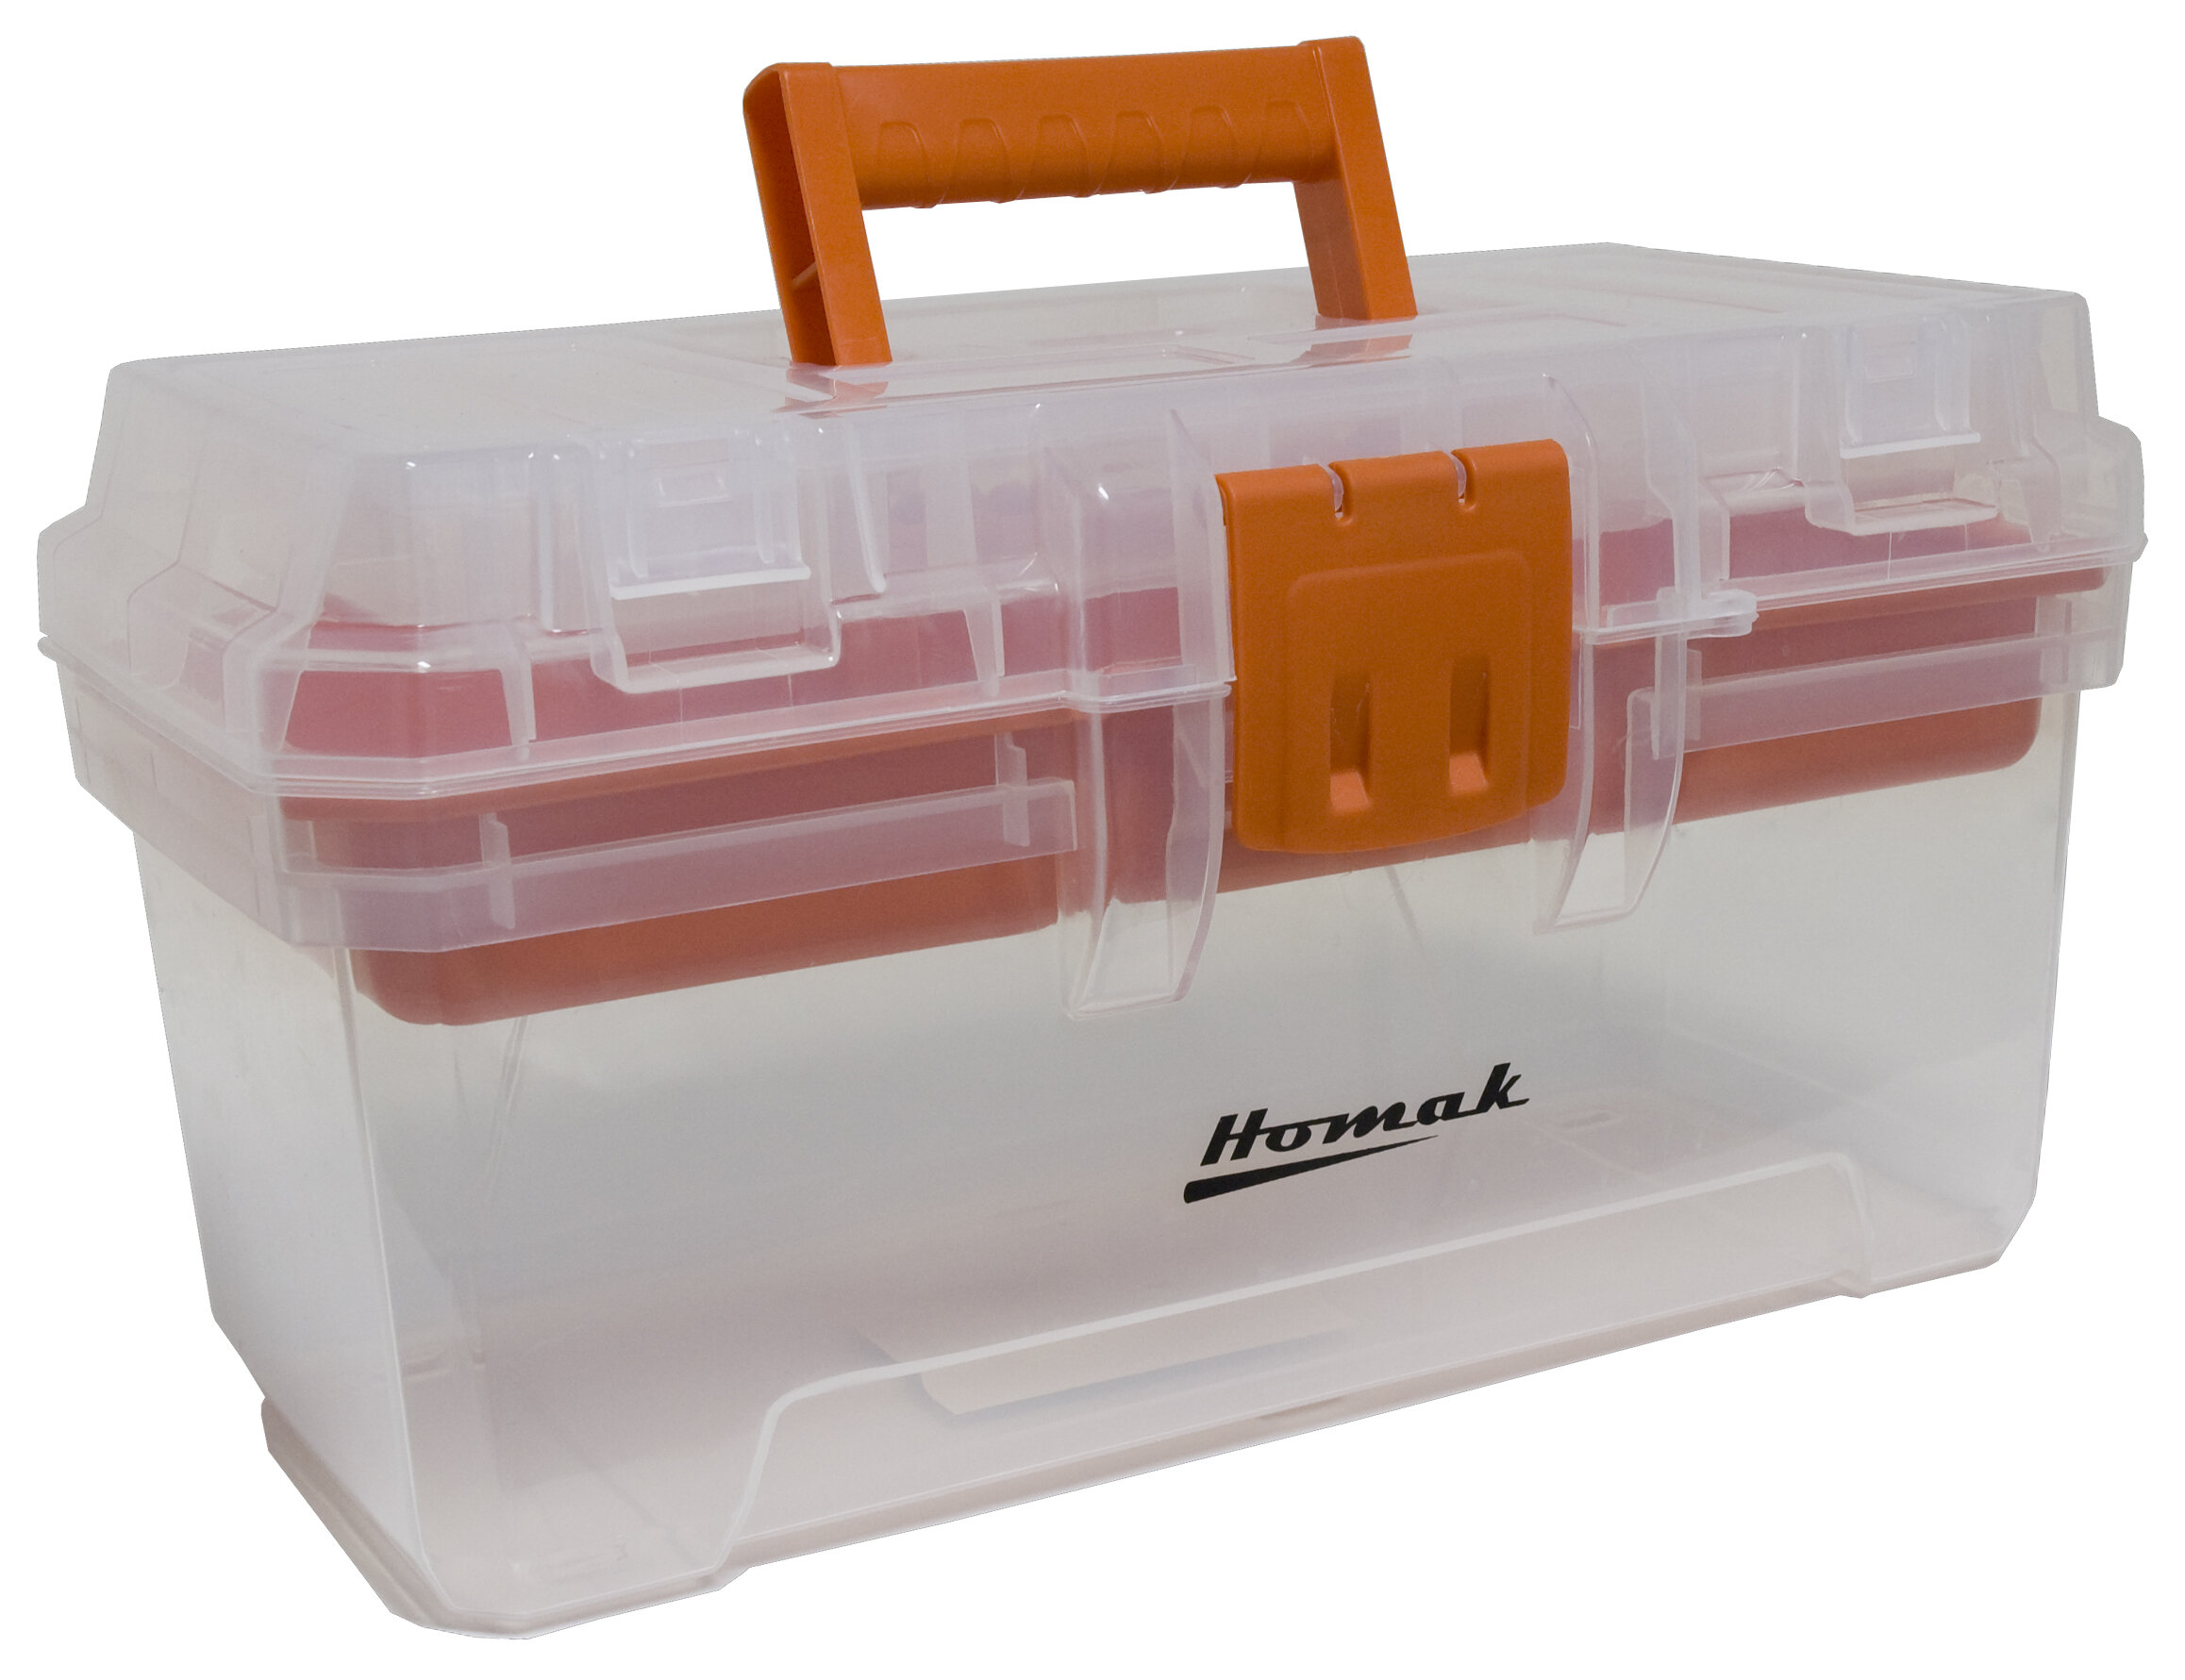 Homak Plastic Transparent 15 Tool Box & Reviews